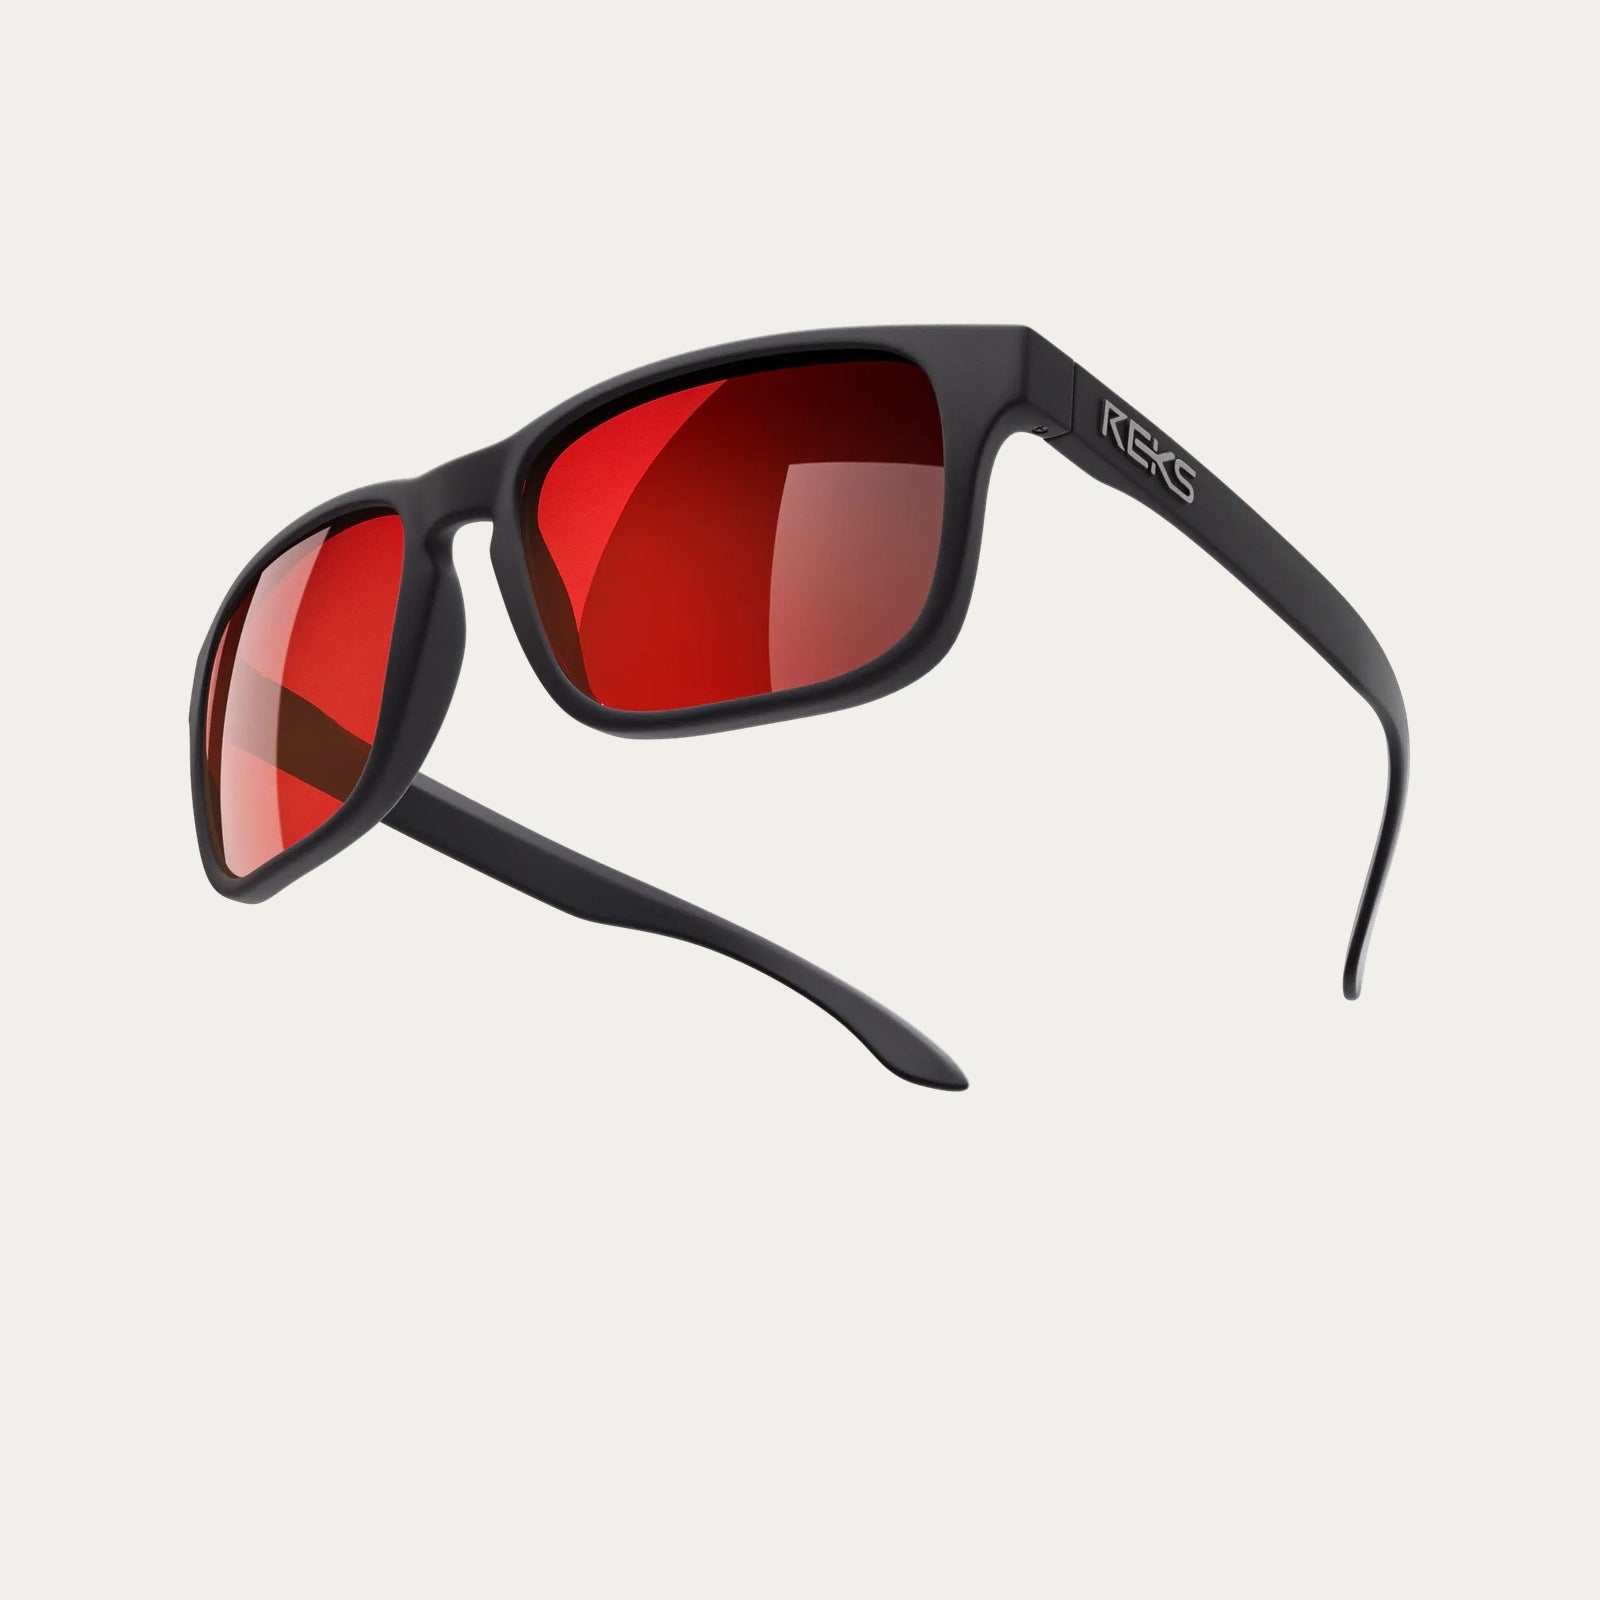 Reks | Sport Polycarbonate Sunglasses Black Red Mirror